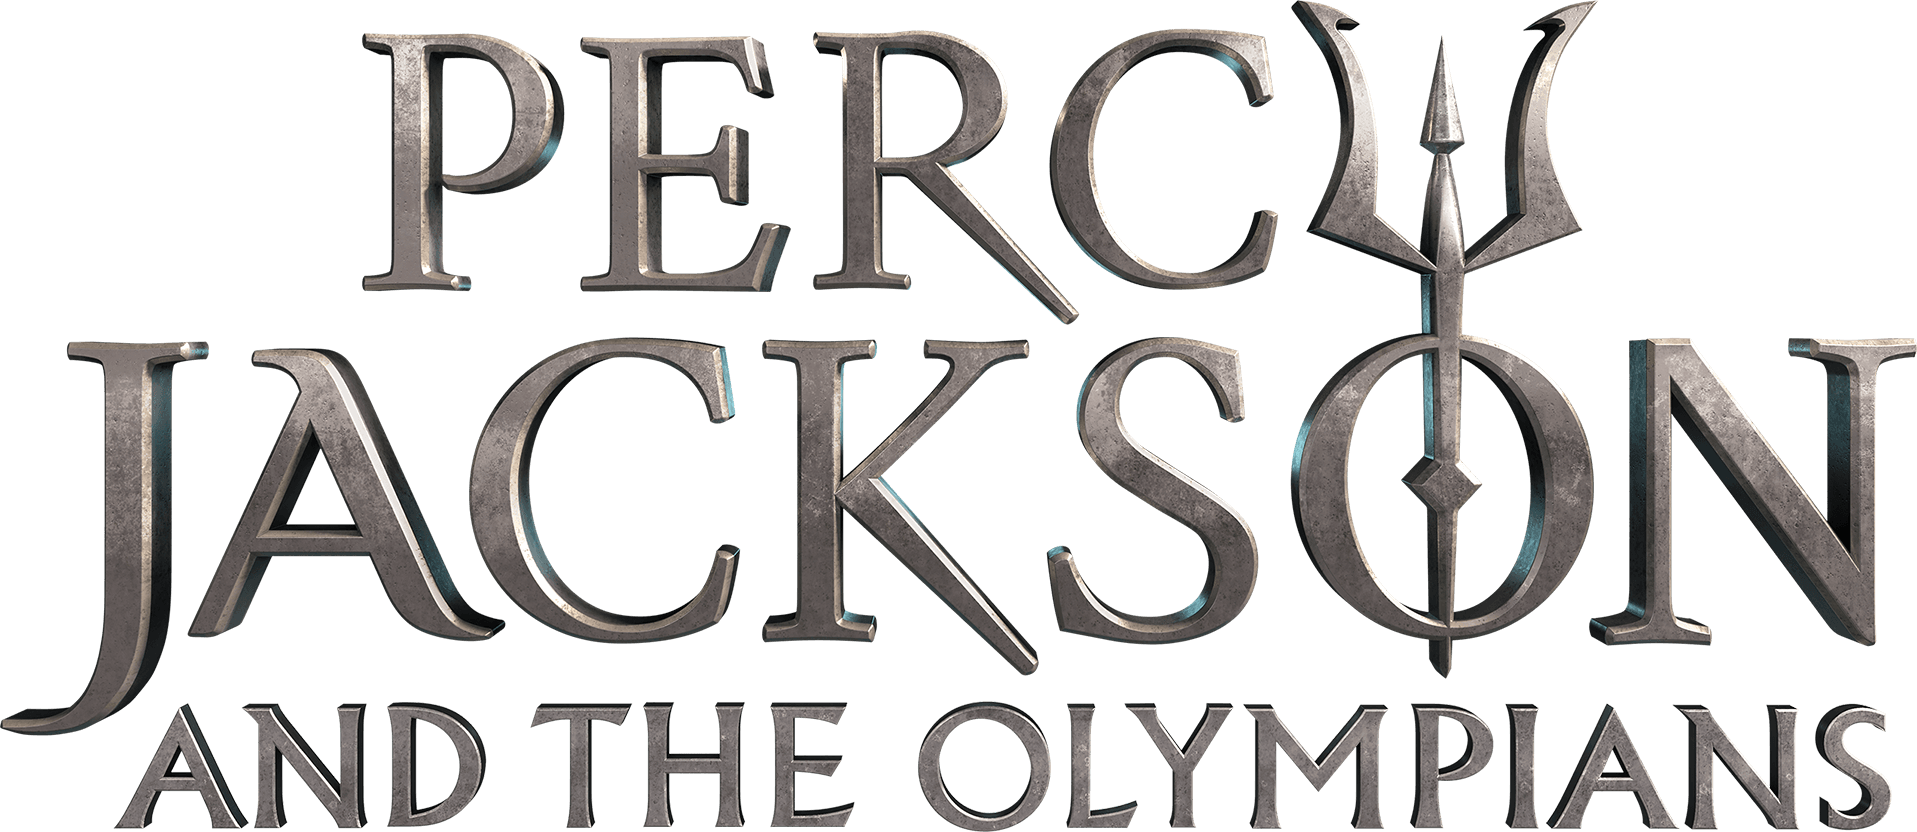 Percy Jackson and the Olympians logo